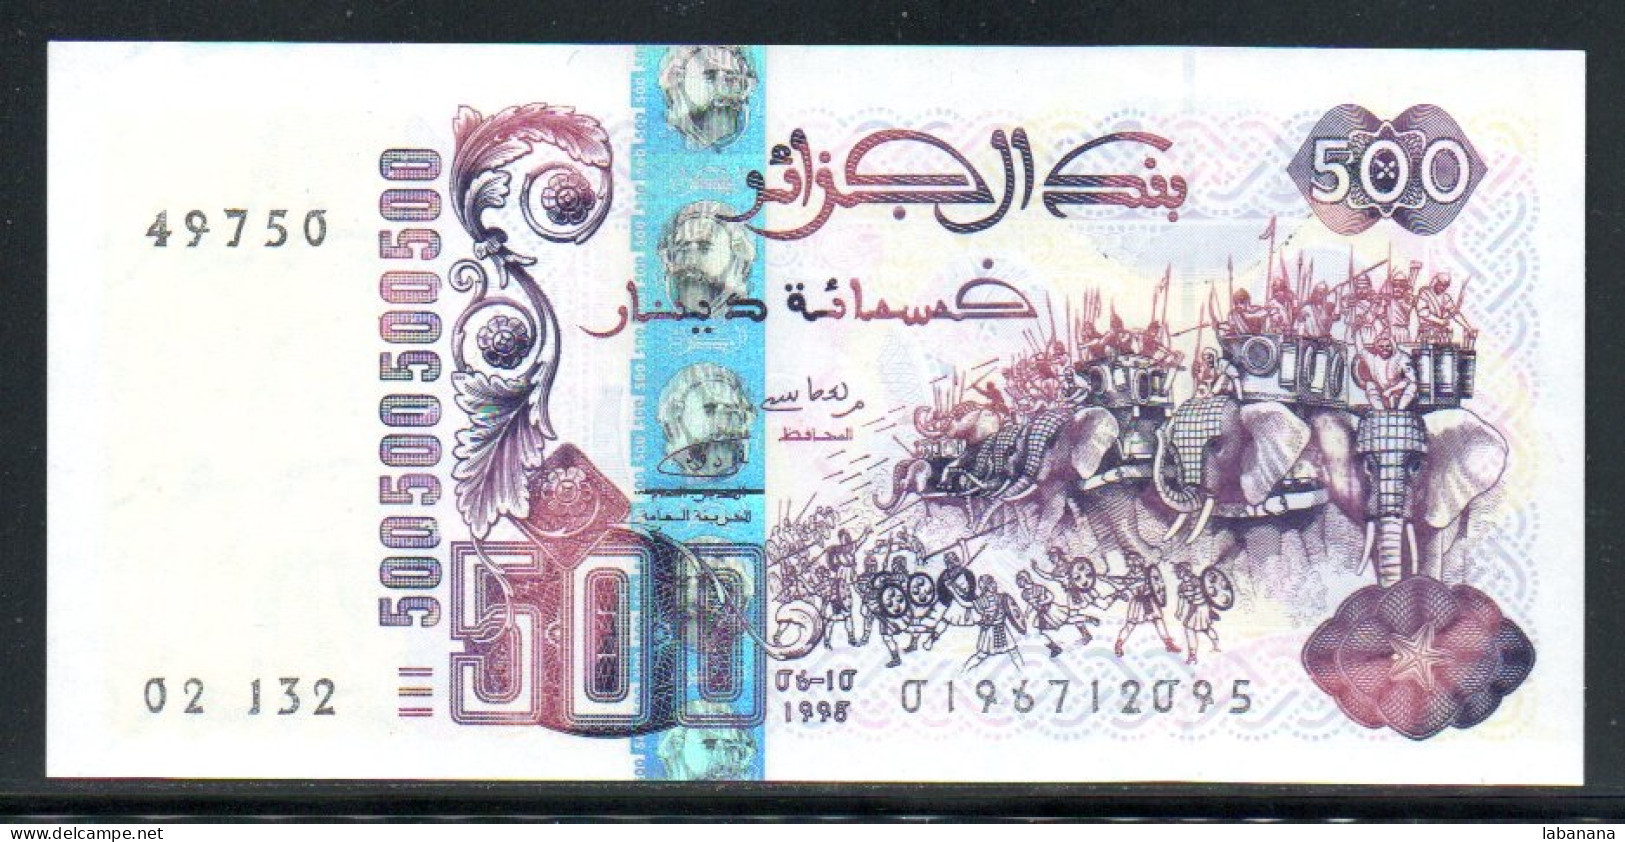 685-Algérie 500 Dinars 1998 02-132 Neuf/unc - Algérie